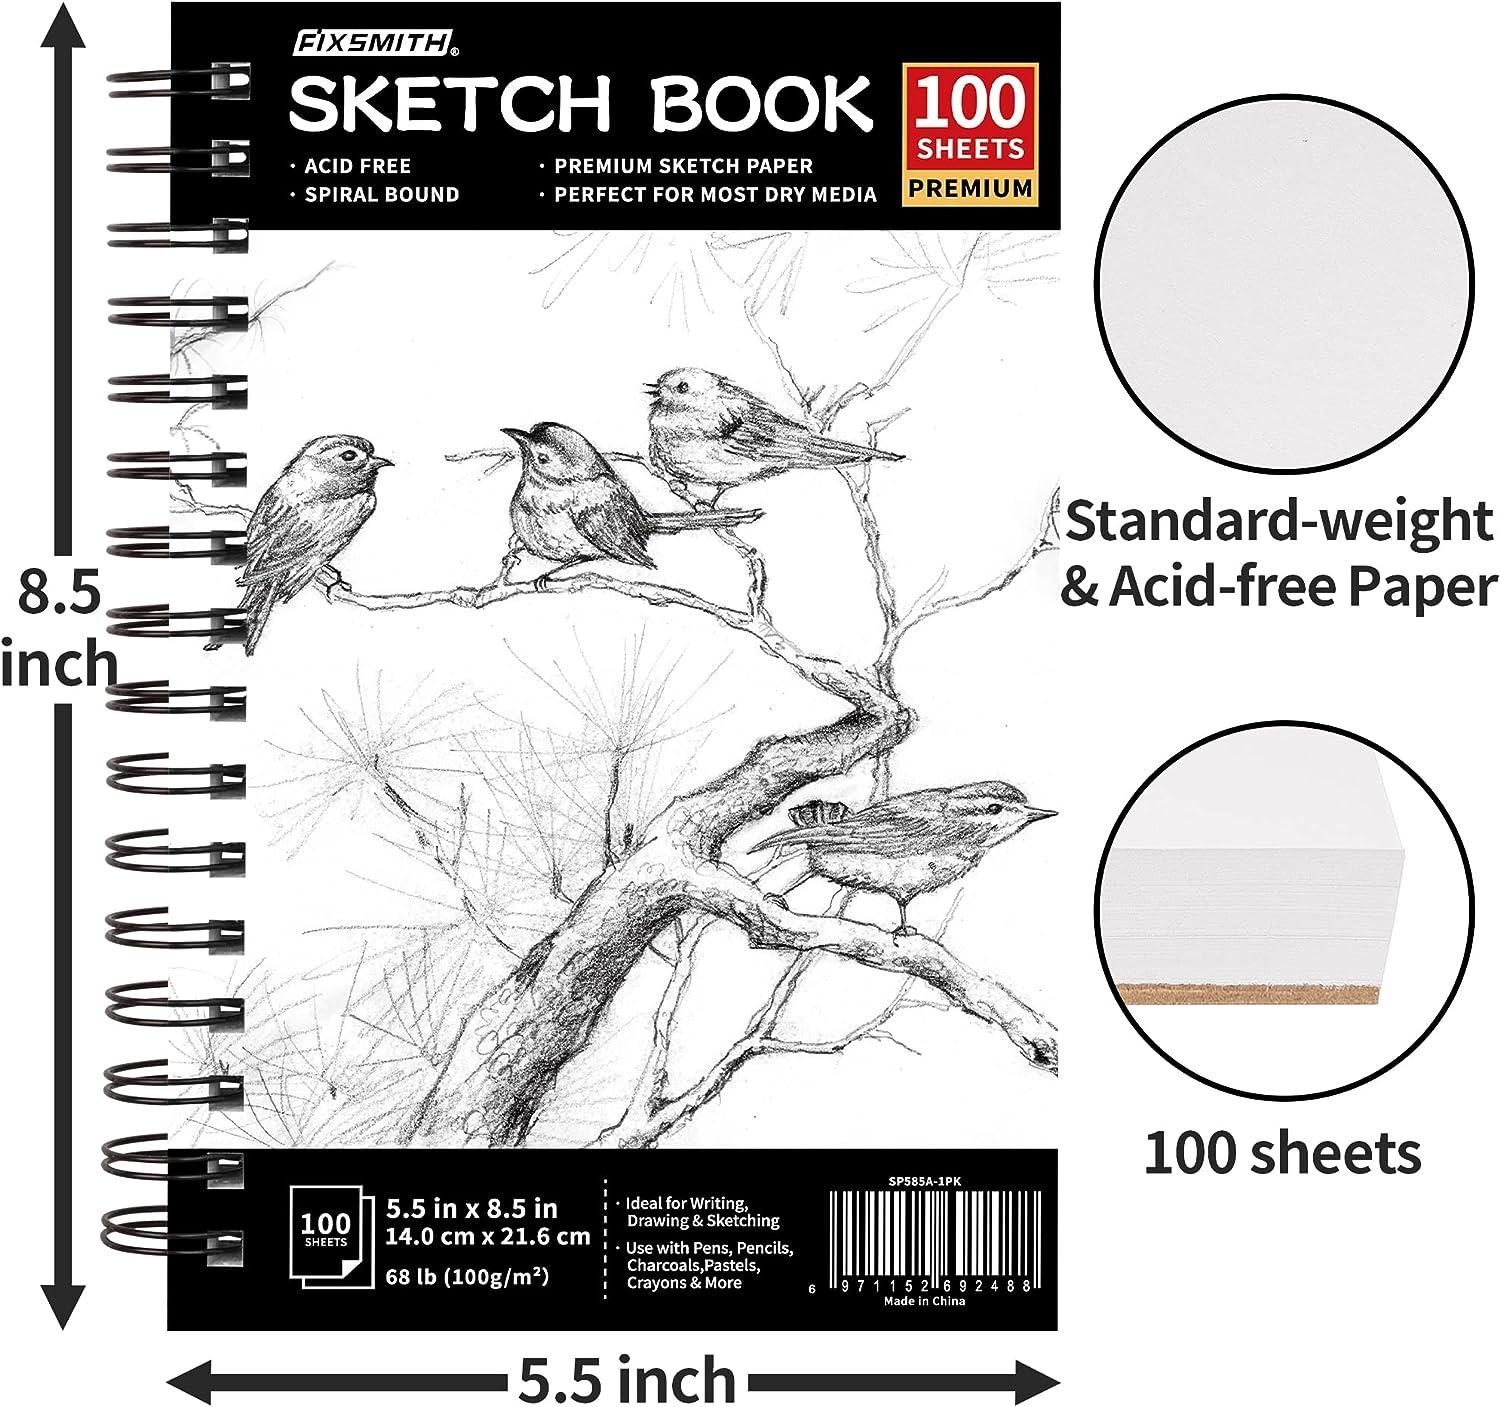 9 x 12 Sketch Book, Top Spiral Bound Sketch Pad, 2 Packs 100-Sheets Each  (68lb/100gsm), Acid Free Art Sketchbook Artistic Drawing Painting Writing